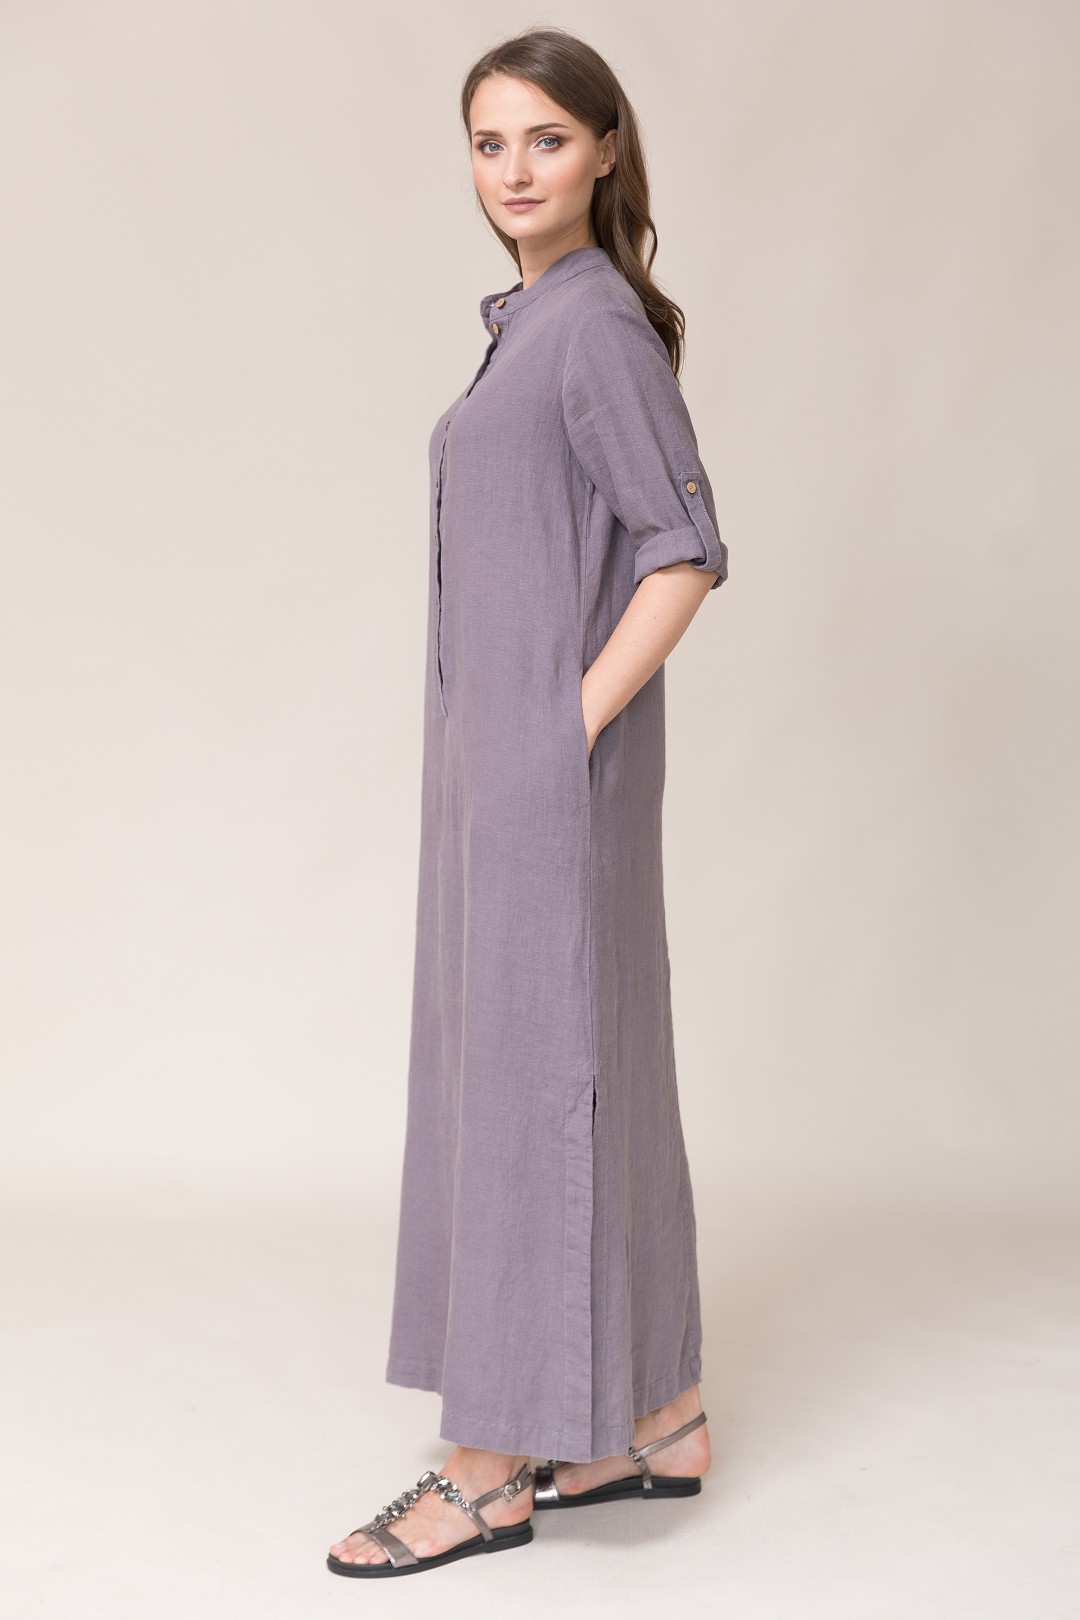 Платье Ружана 405-2 серый